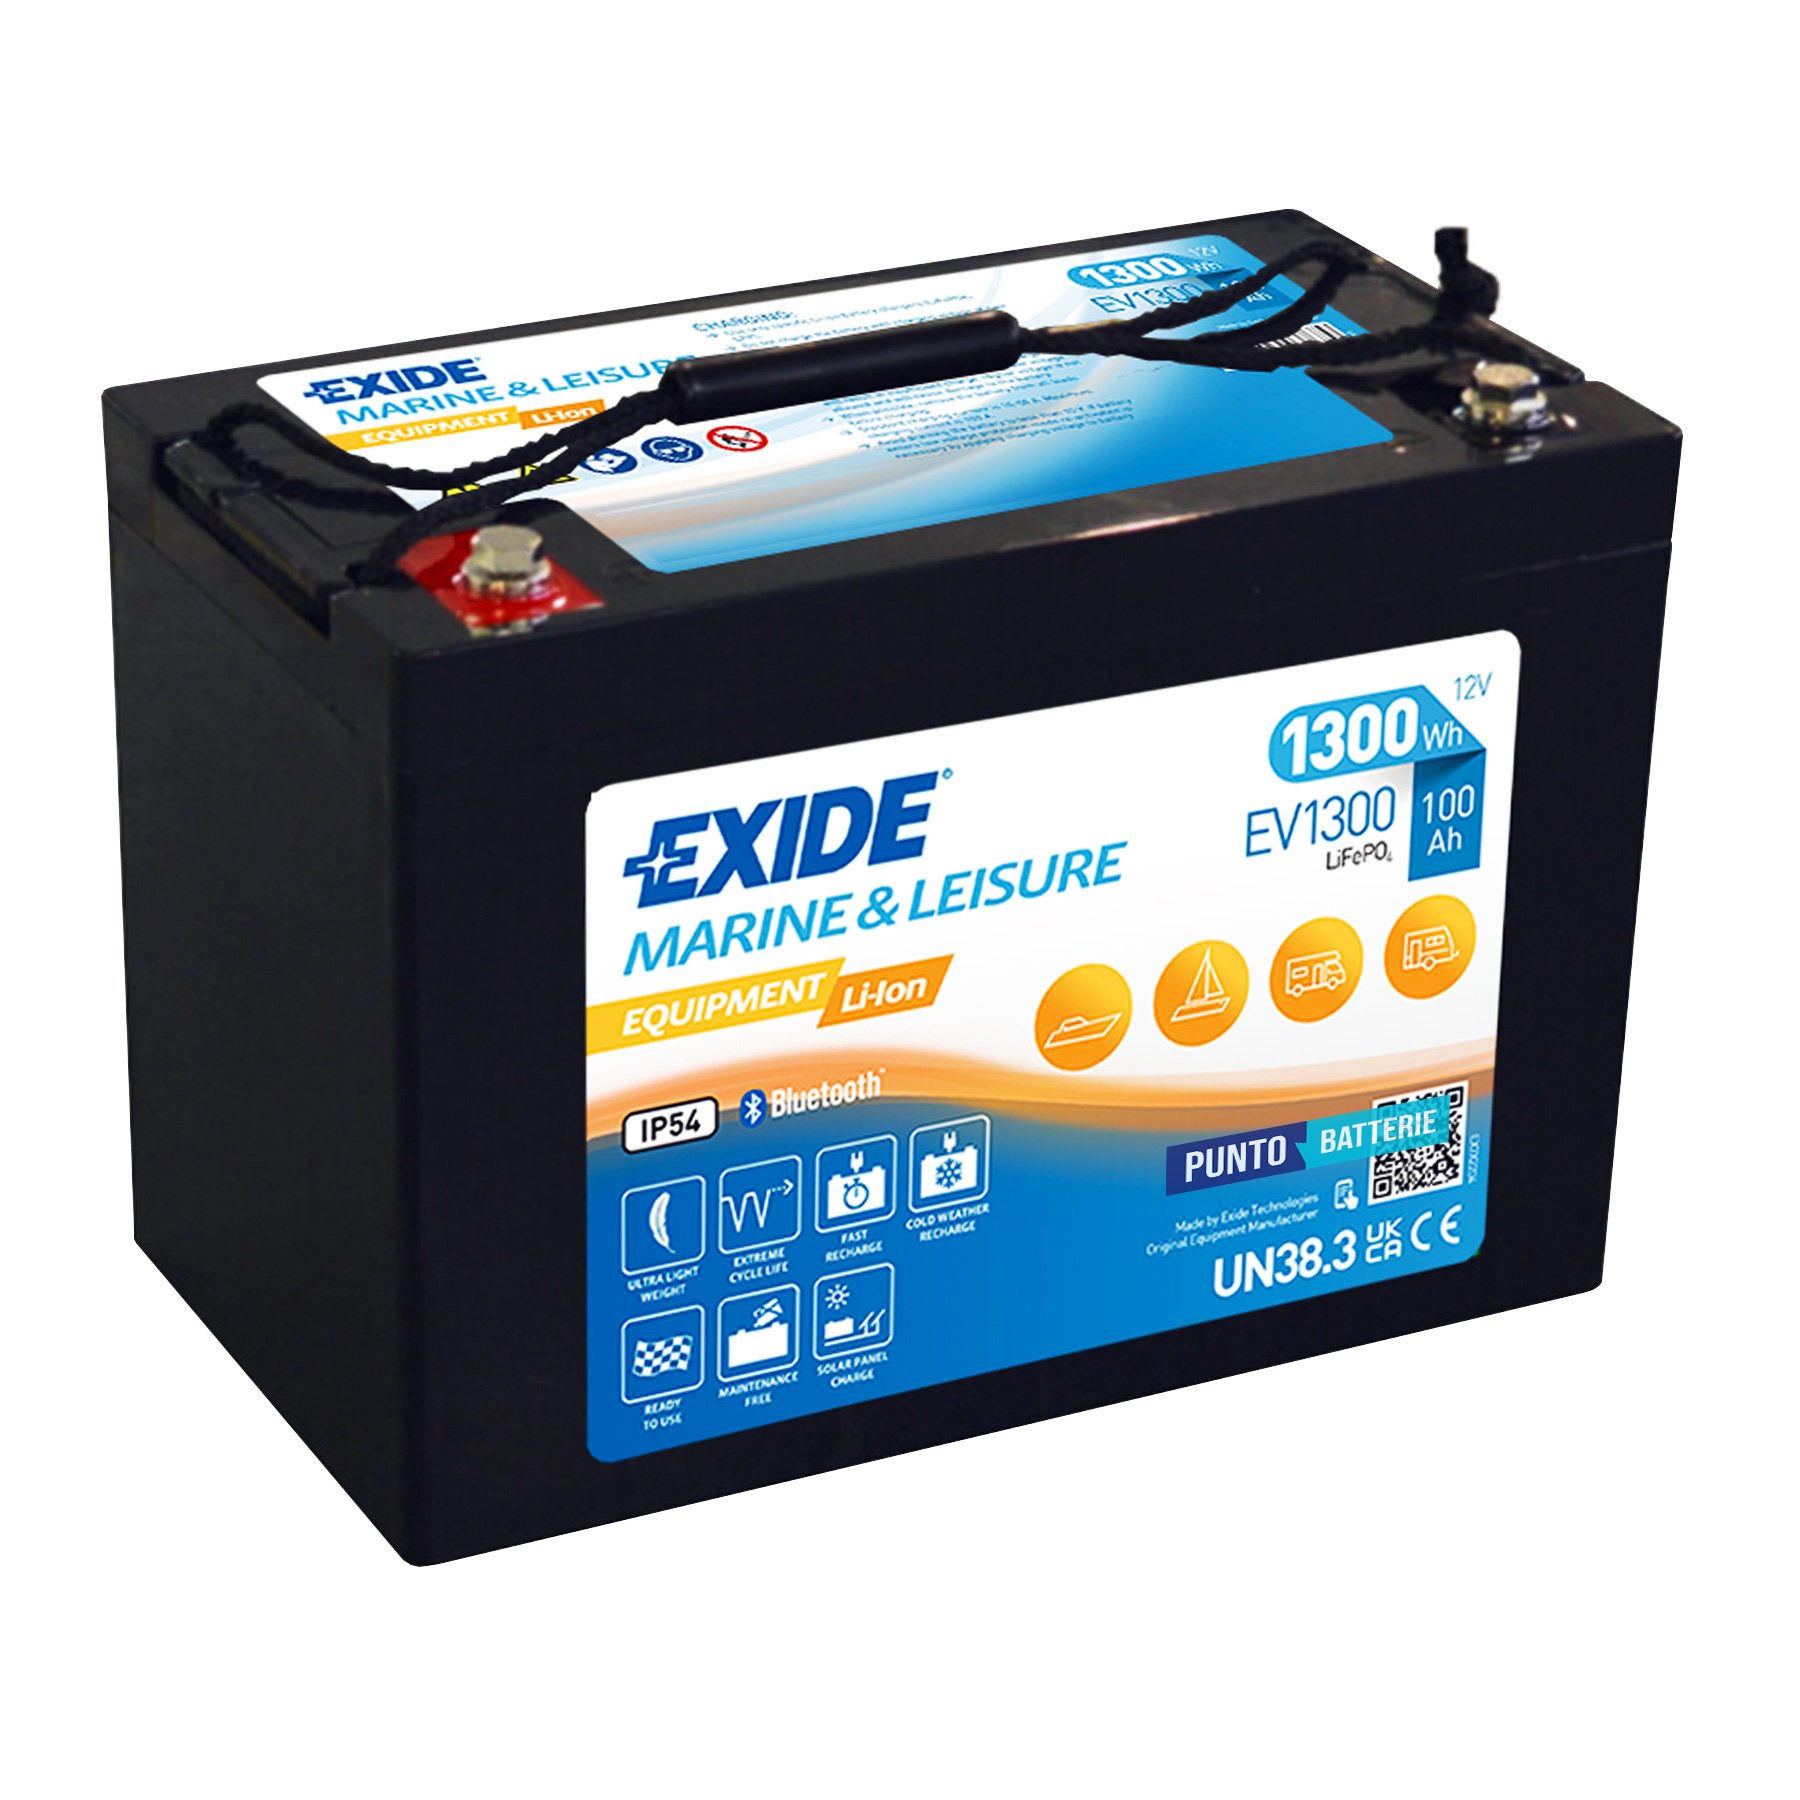 Batteria Exide EV1300 - Equipment Li-Ion (12V, 100Ah, 1300Wh)